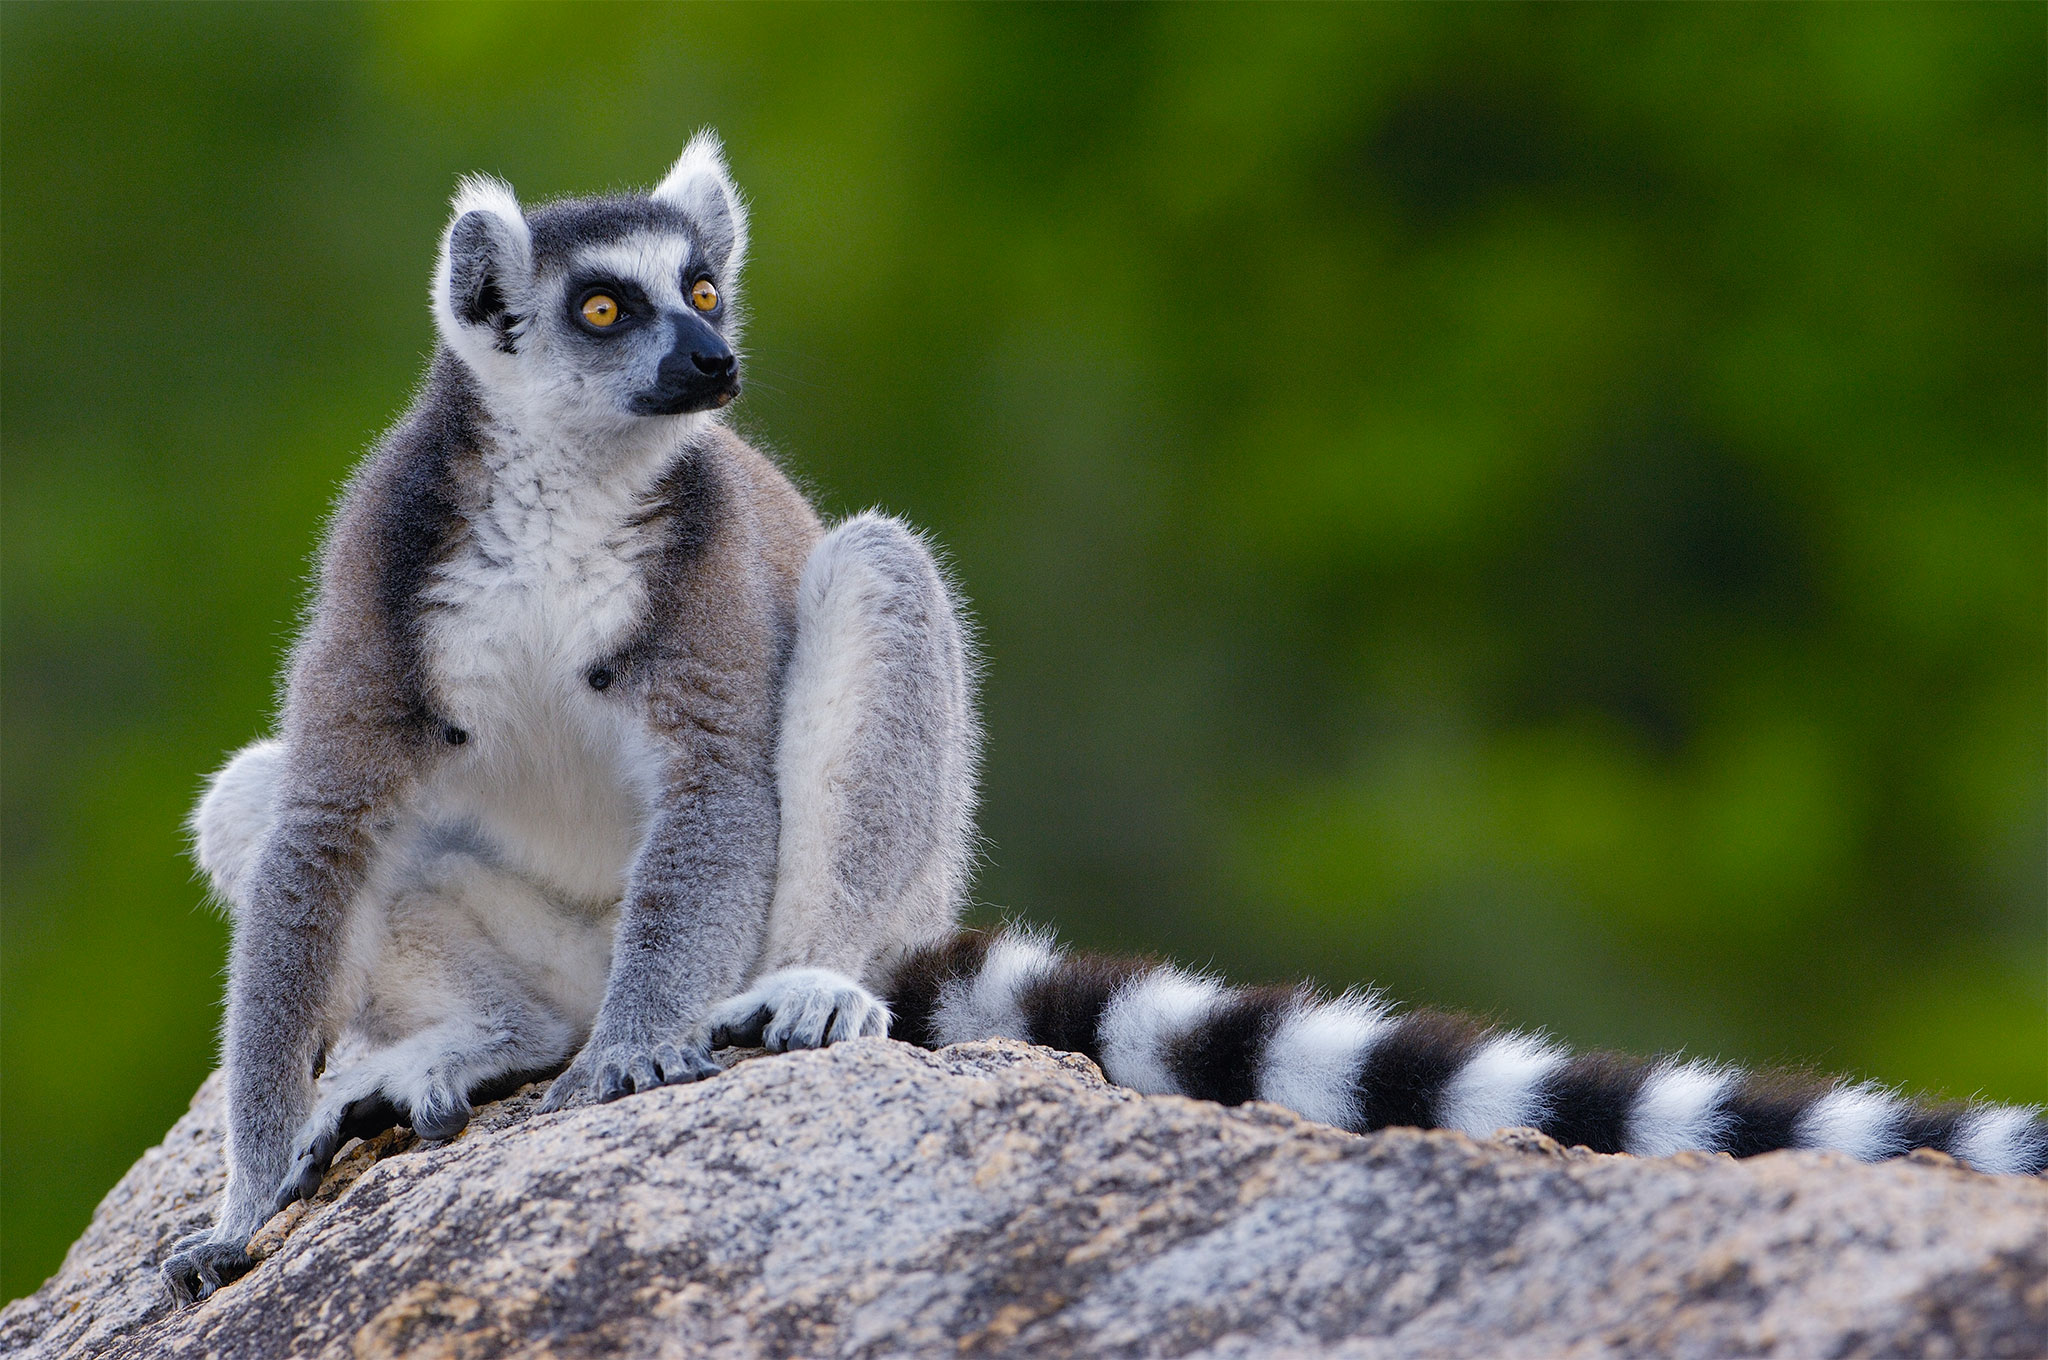 Hotels Offer a Wide-Eyed Amenity: Lemurs